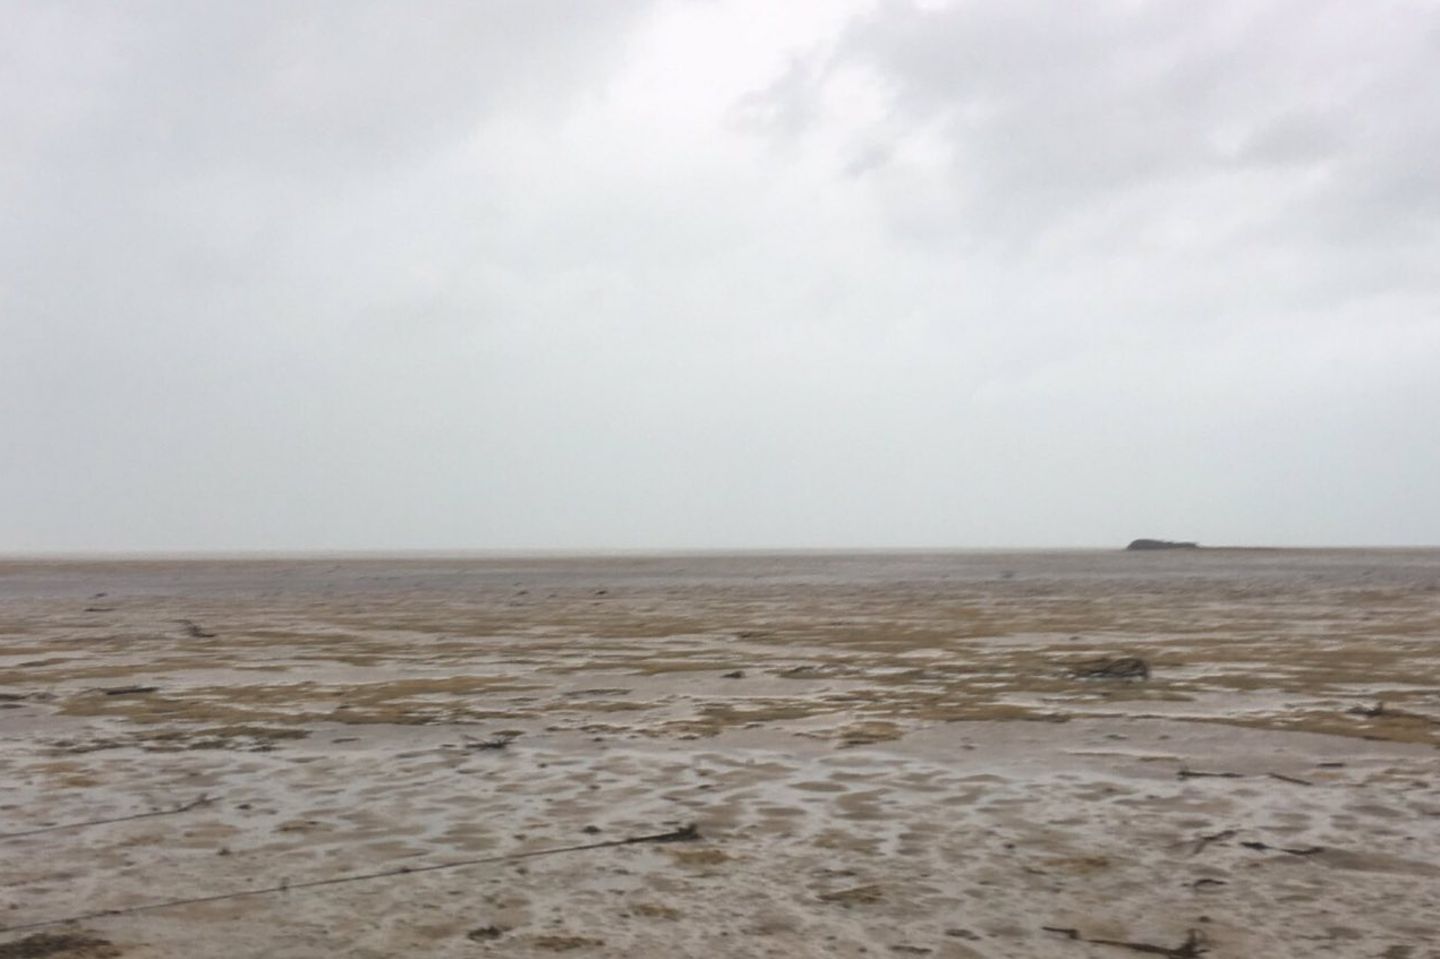 Das Meer nach Hurrikan "Irma" 